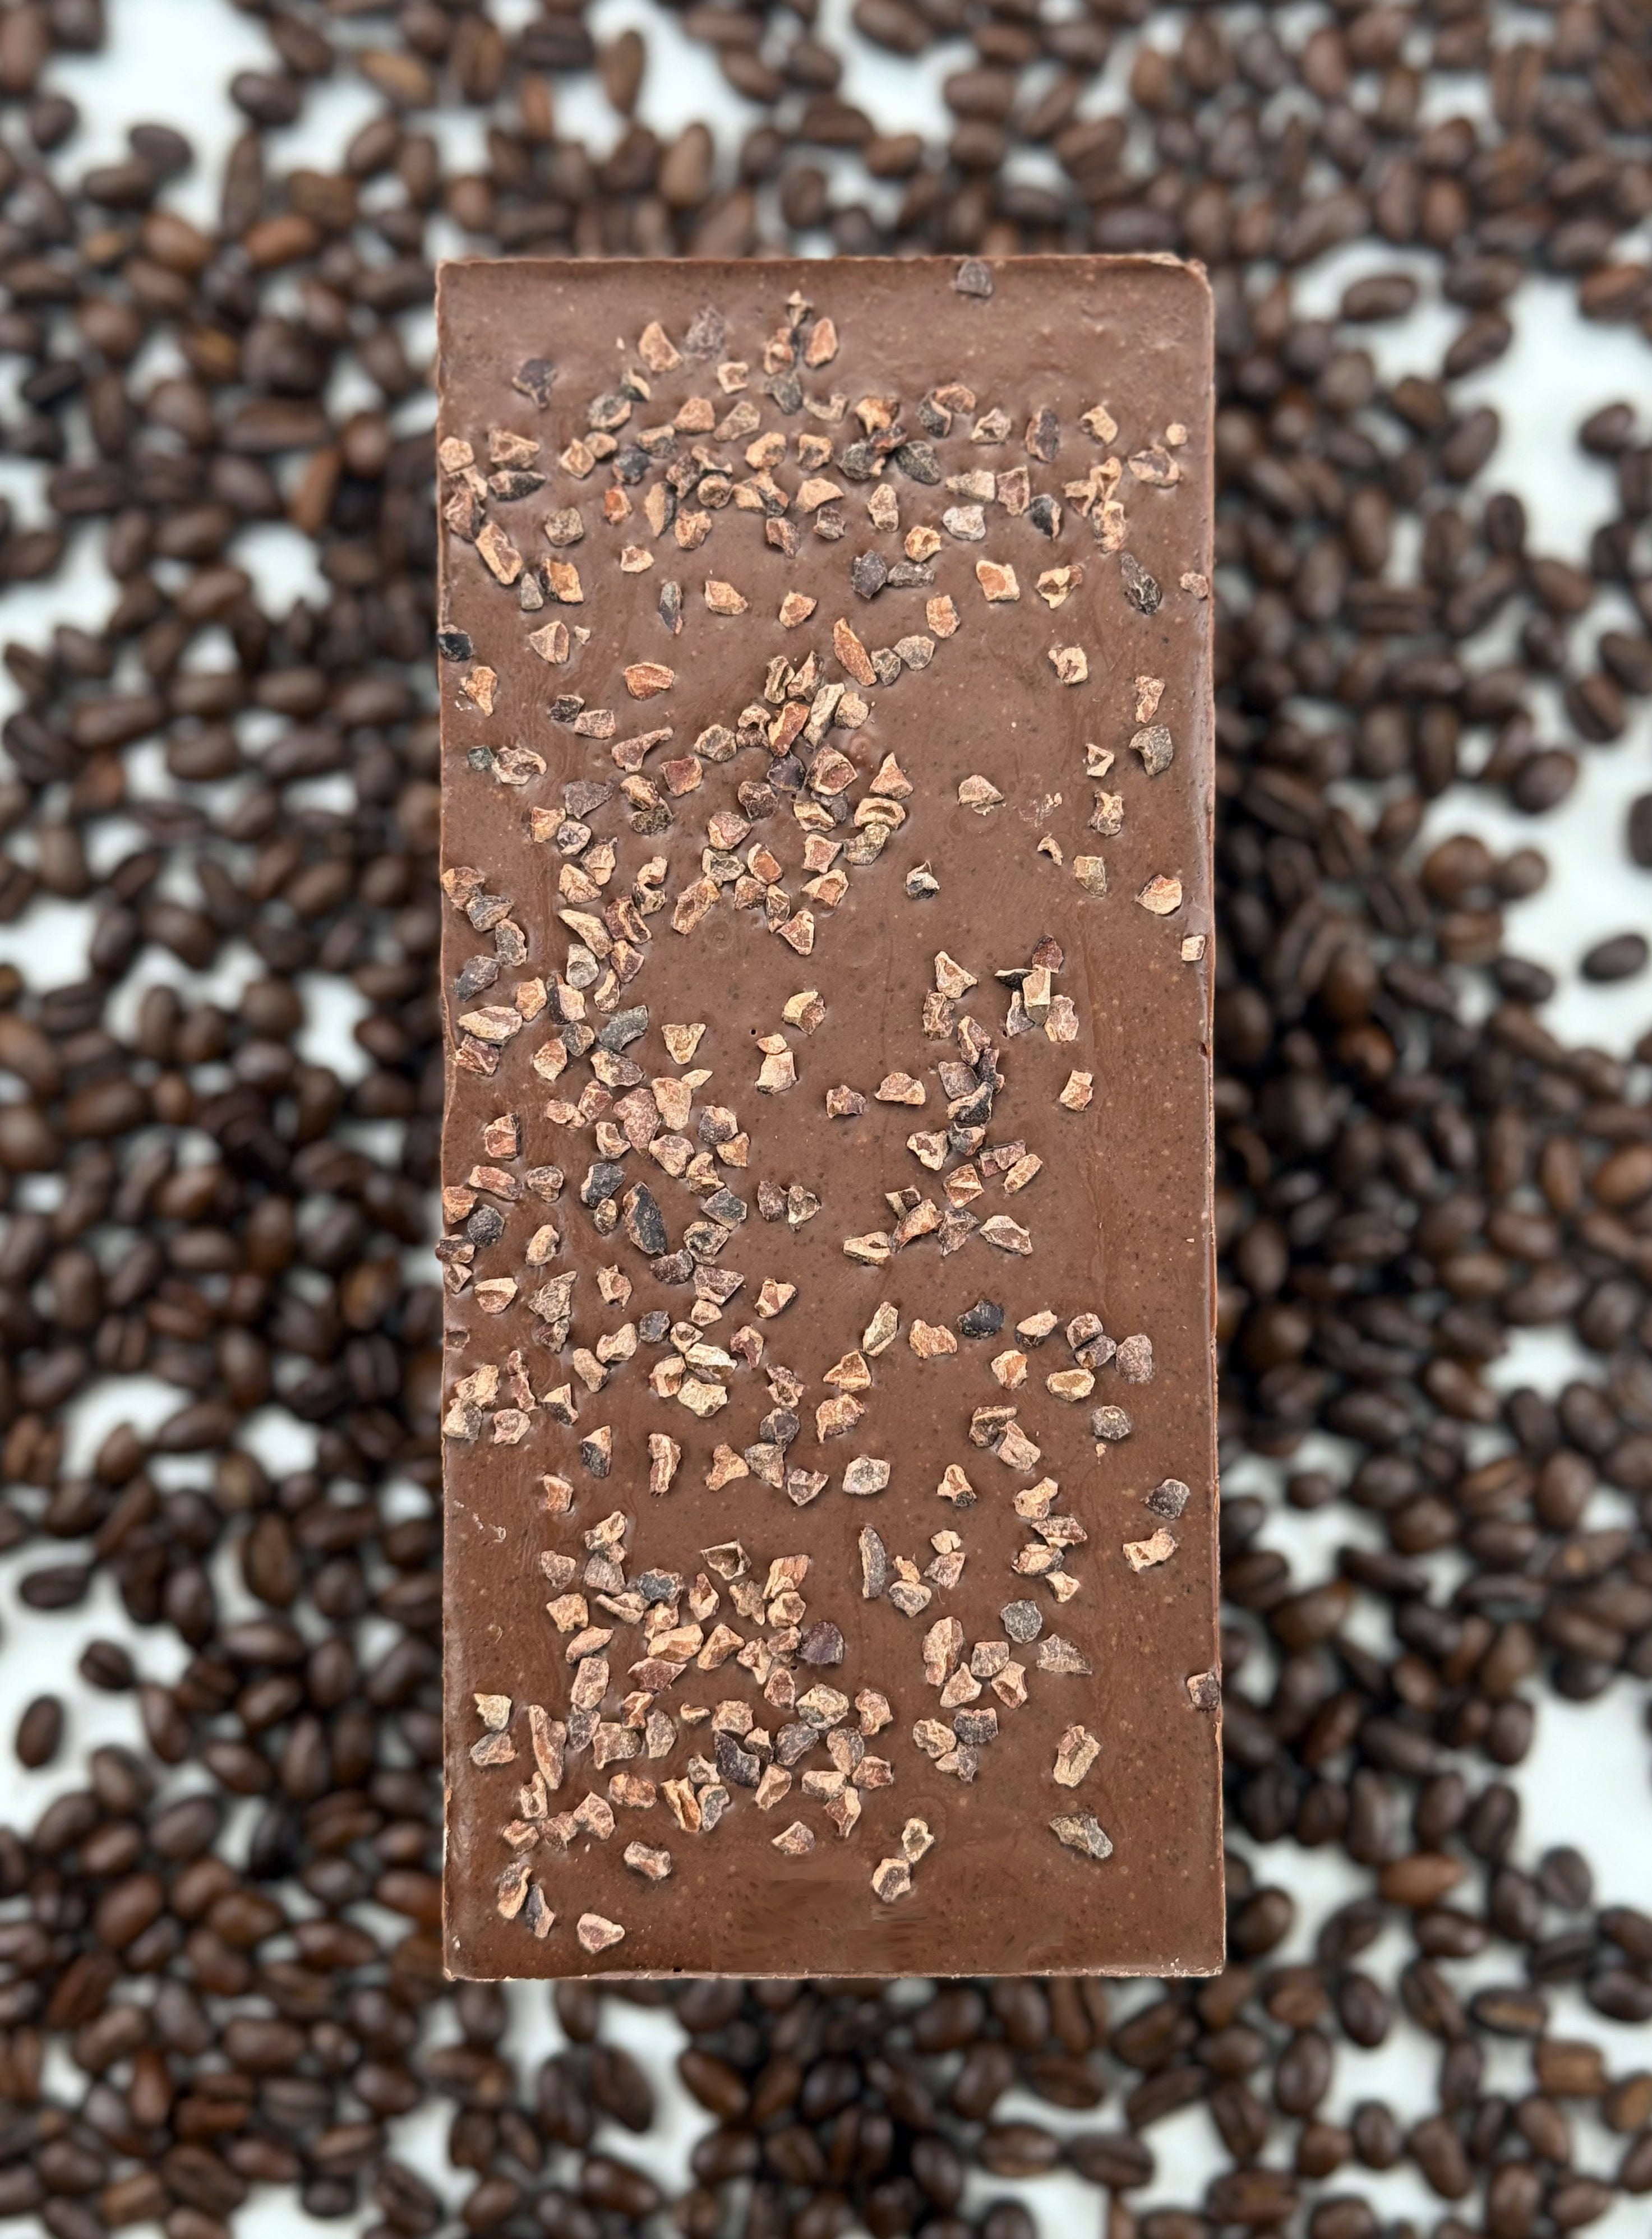 Coffee Chocolate - FRENS CHOCOLATES